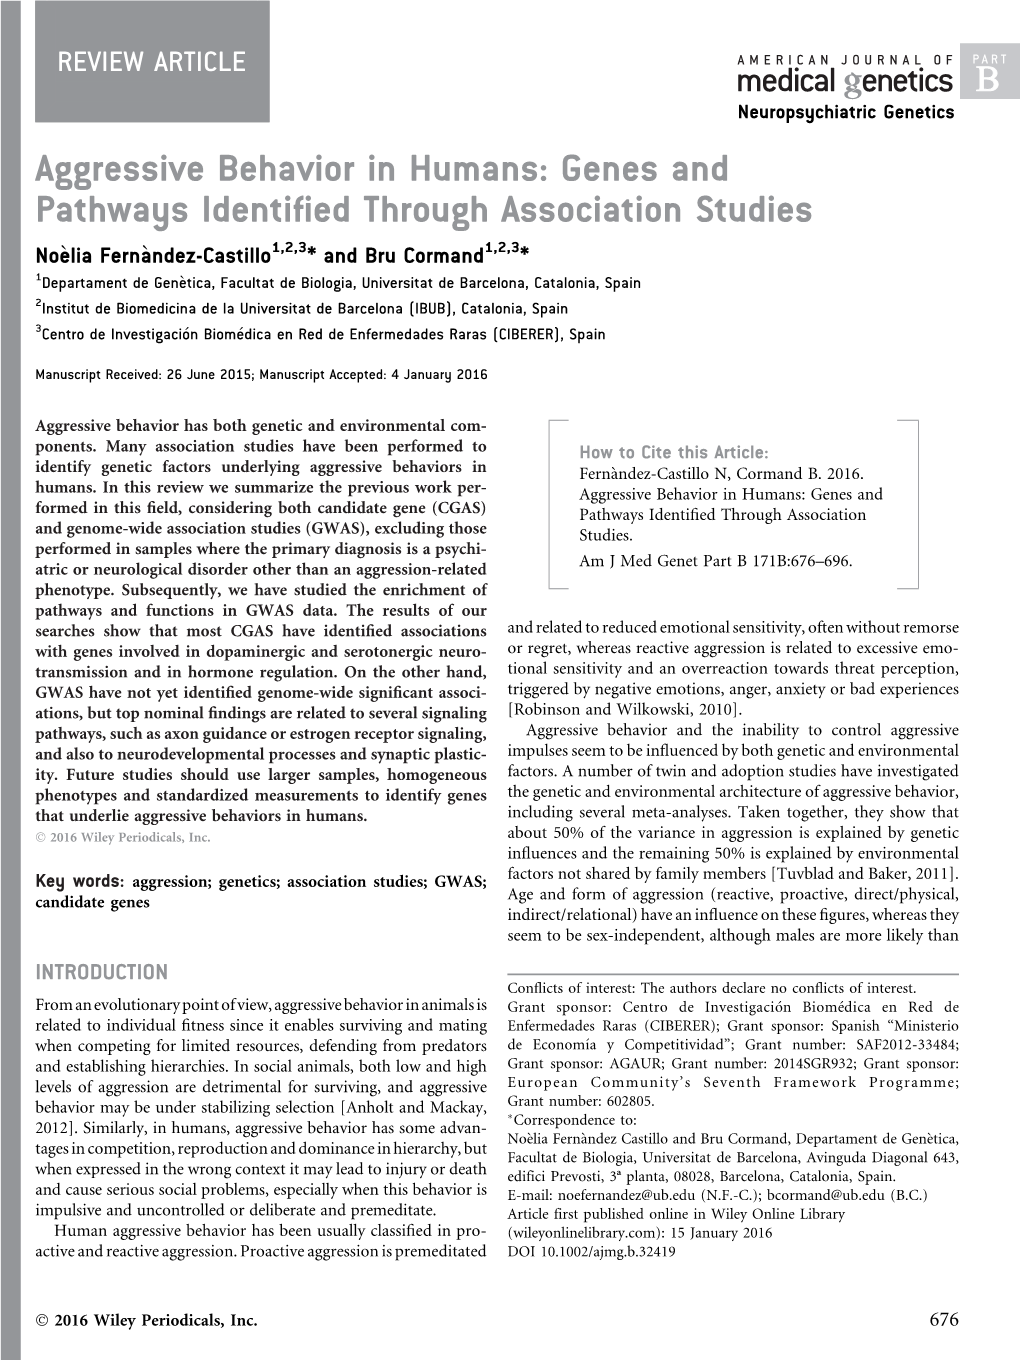 Aggressive Behavior in Humans: Genes and Pathways Identified